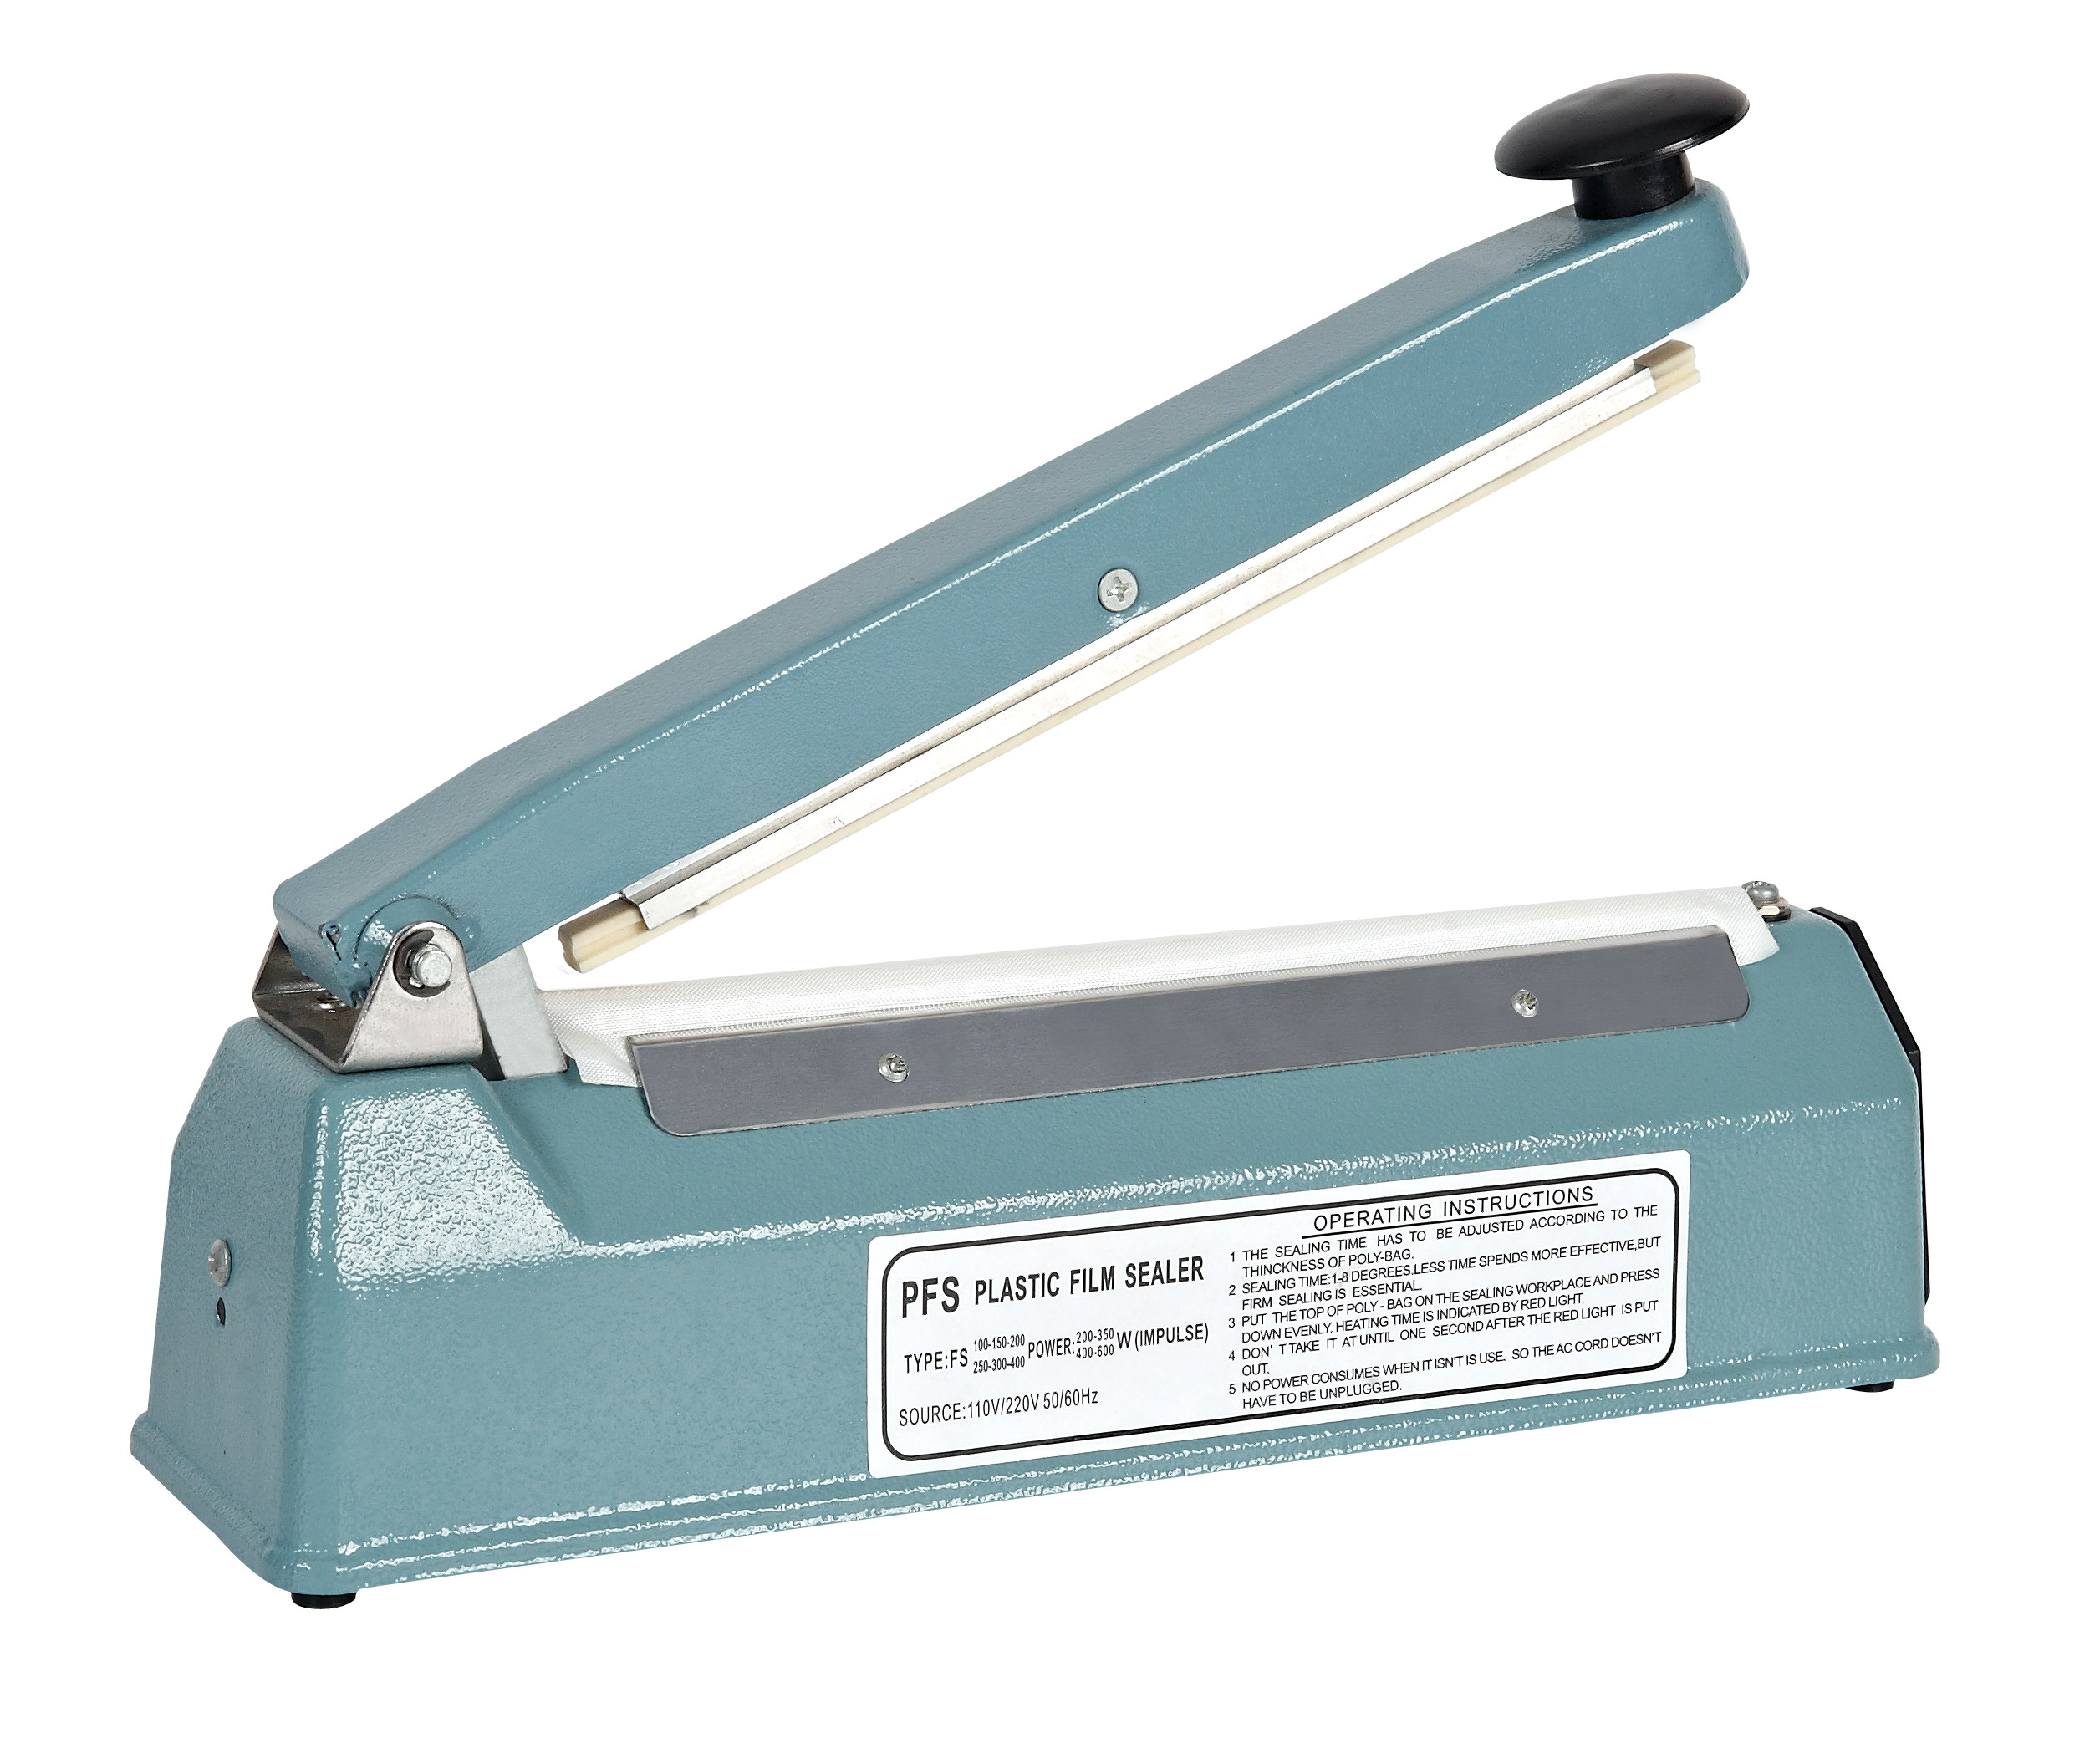 <b>Impulse Tabletop Sealer Hand Operated Sealing Machine FS-300</b>